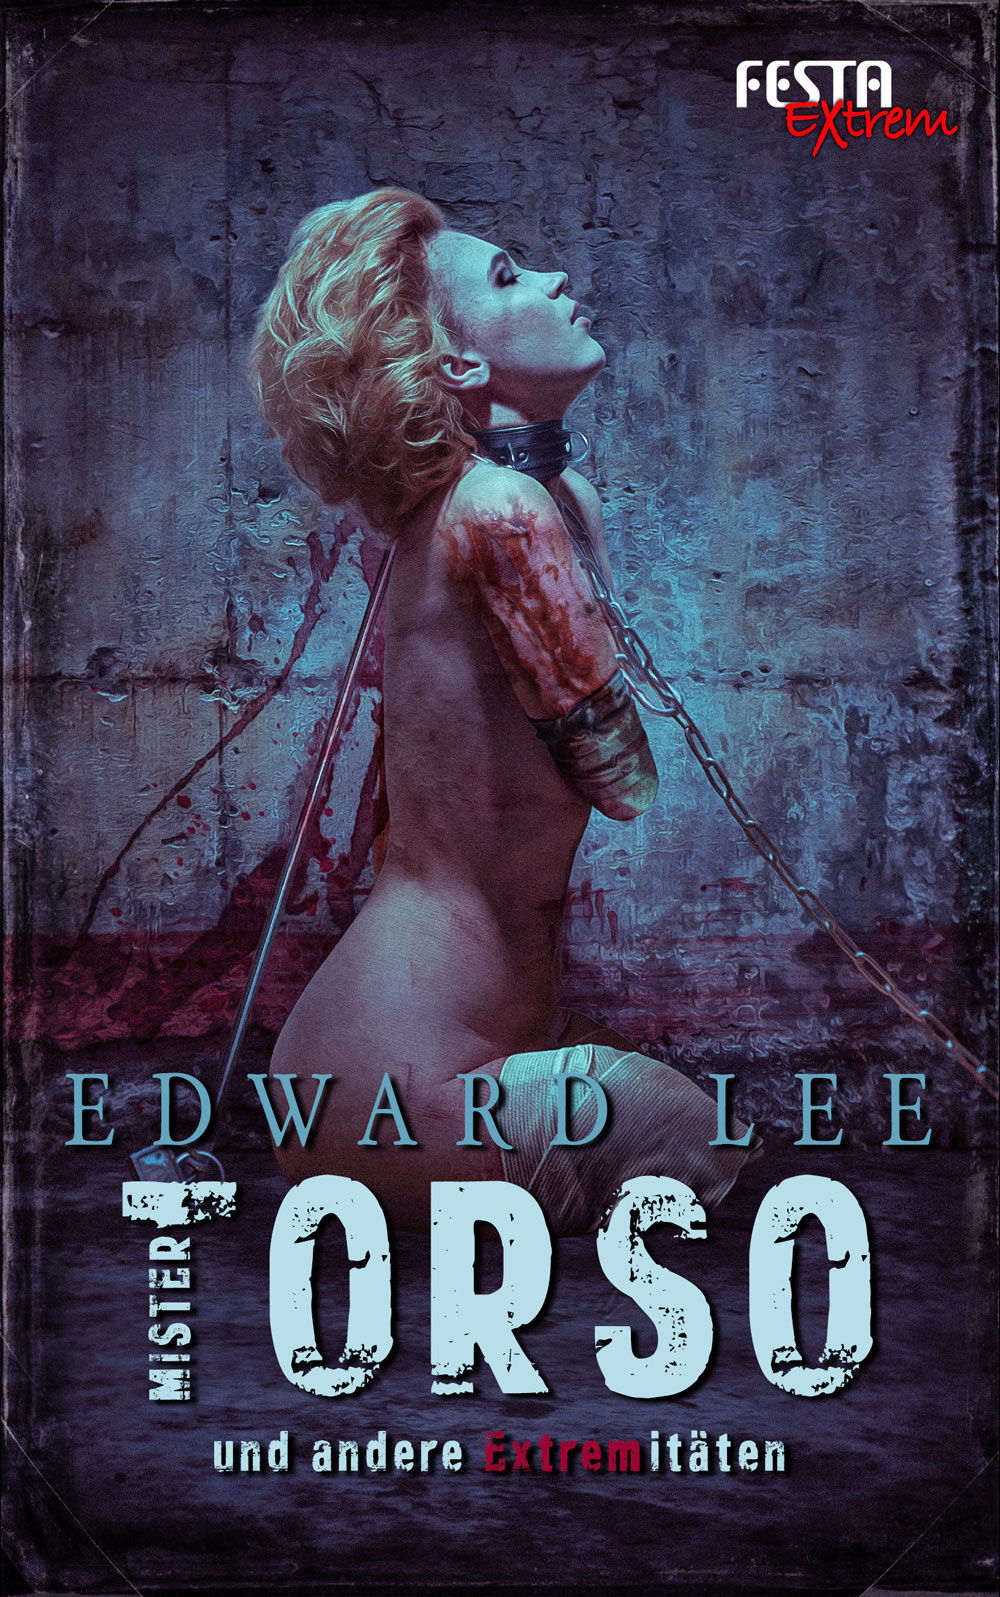 *Werbung* Rezension zu Edward Lee's "Mister Torso" 1